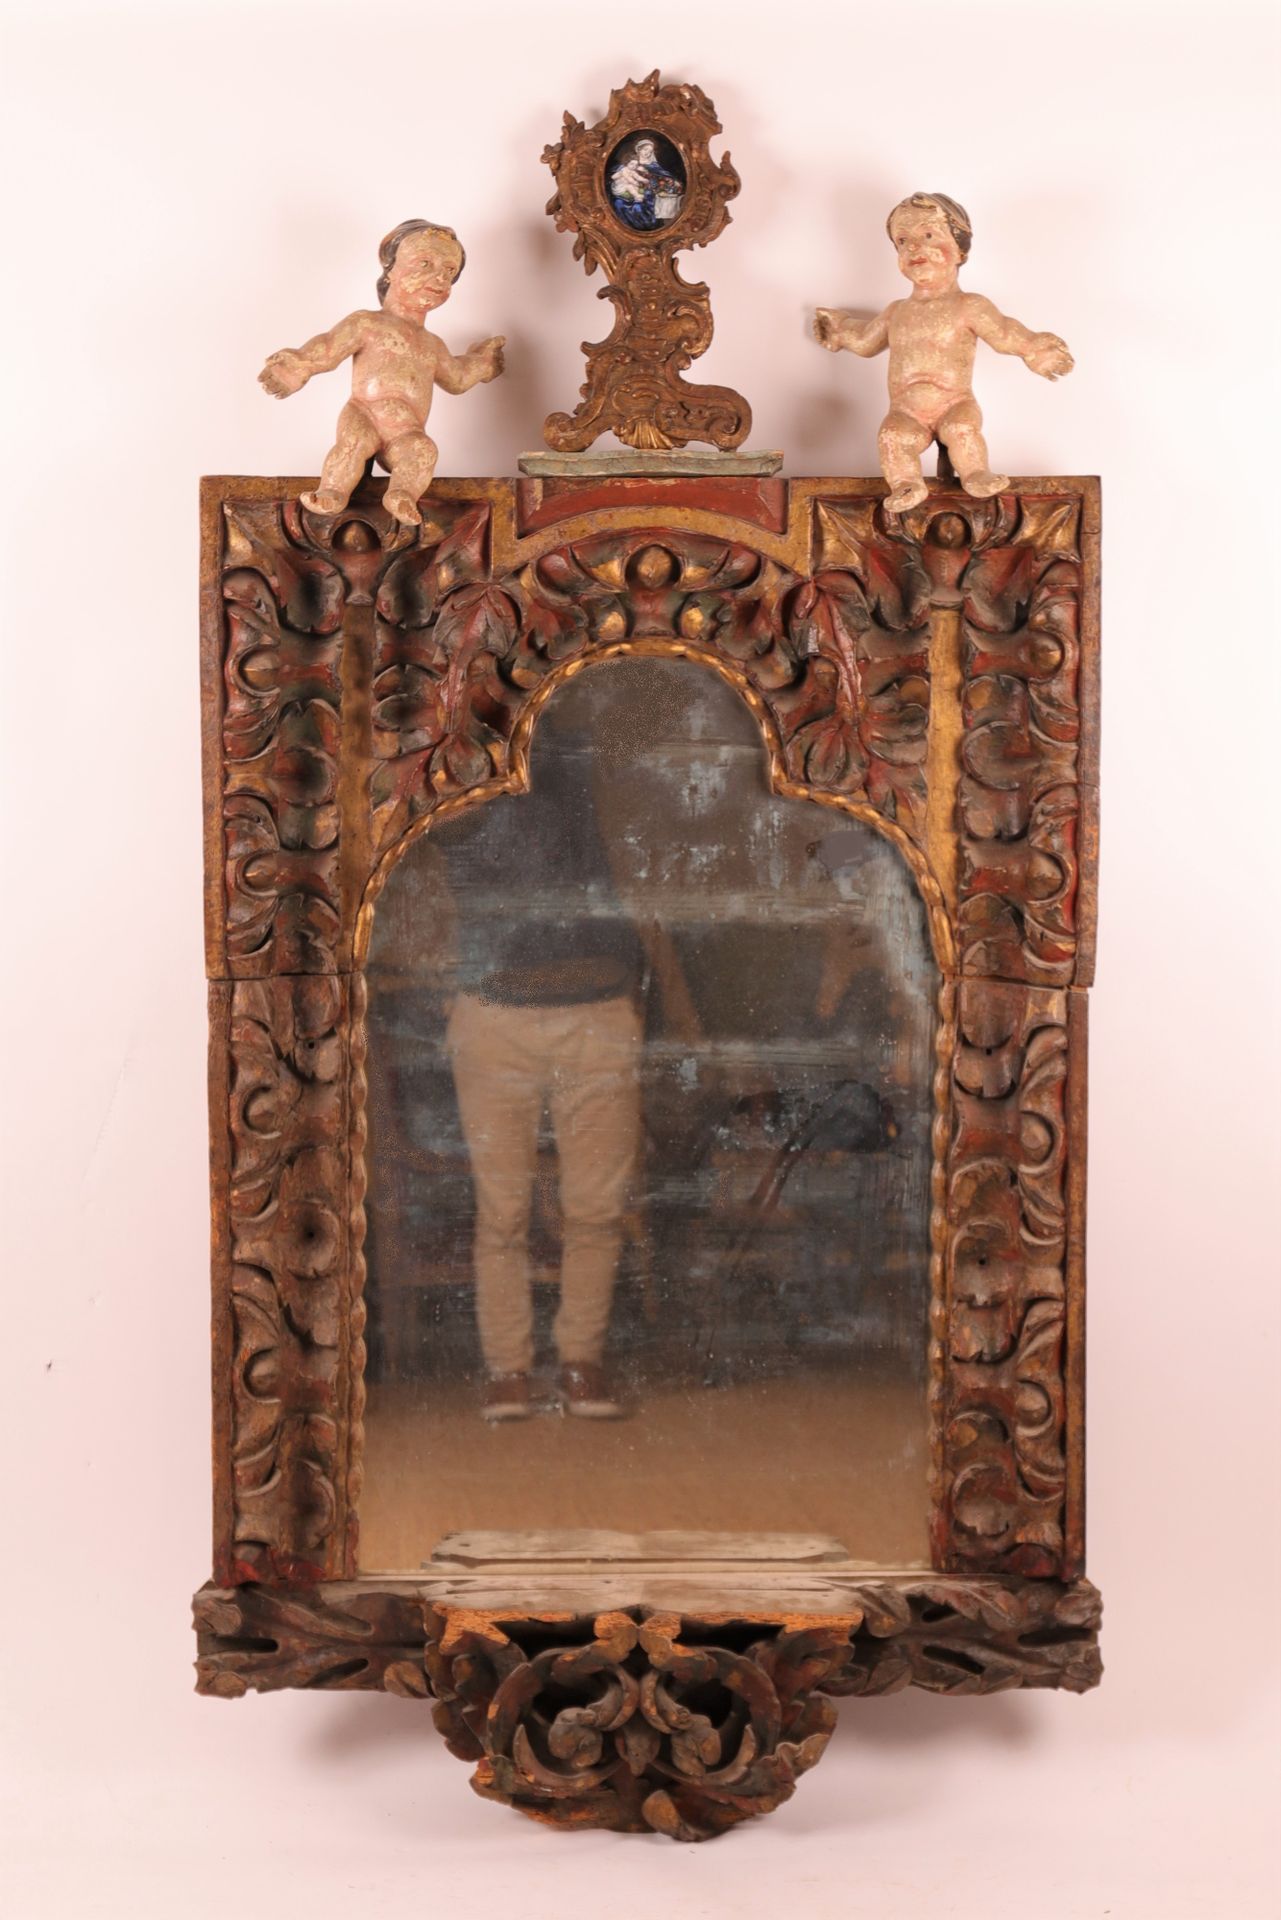 Null GRAN ESPEJO ITALIANO DE MADERA TALLADA, siglo XVIII
Madera tallada policrom&hellip;